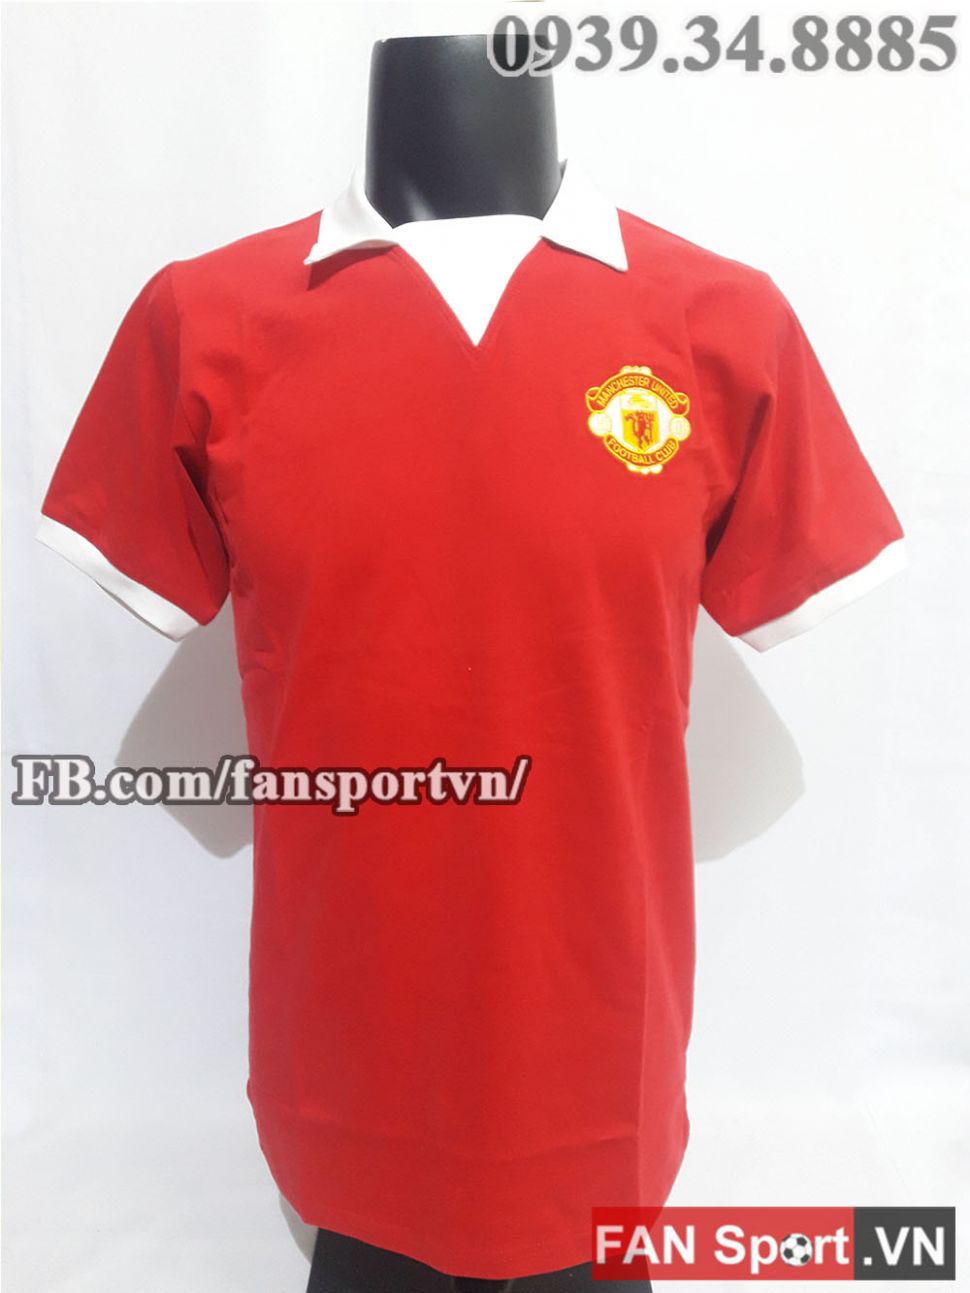 manchester united 1972 shirt